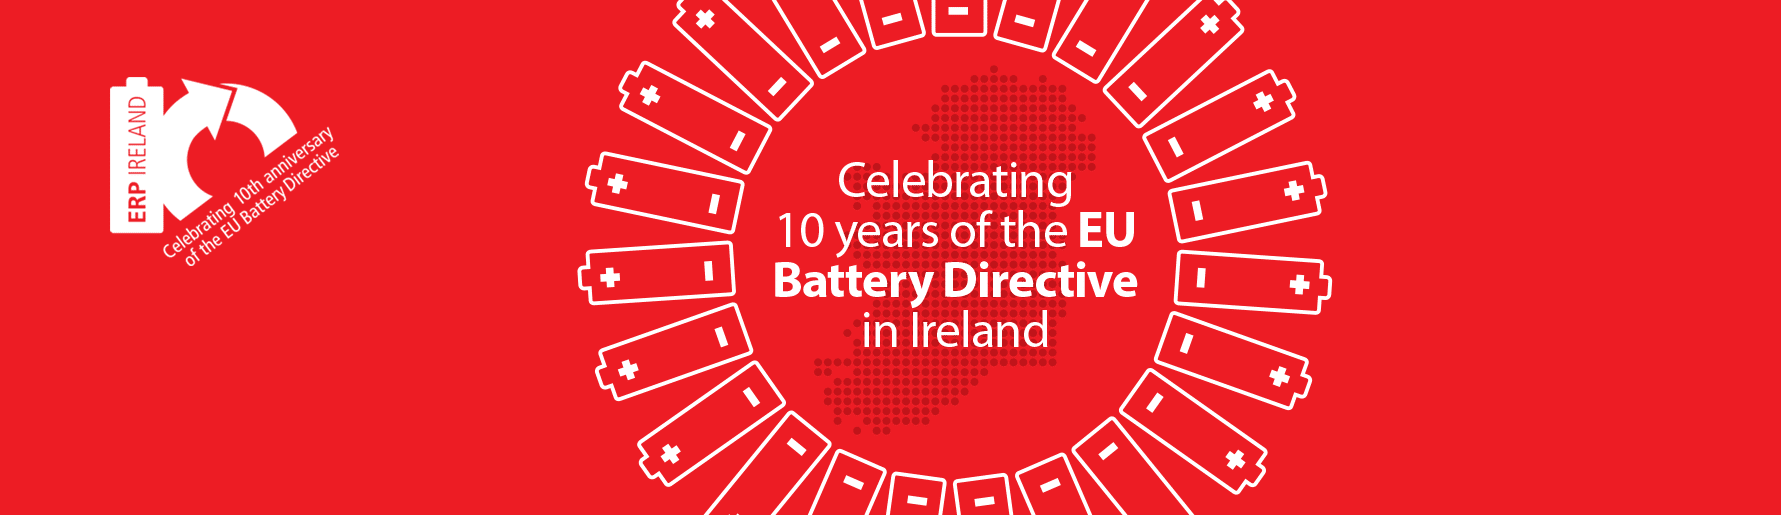 10-YEAR-Battery-Directive-banner